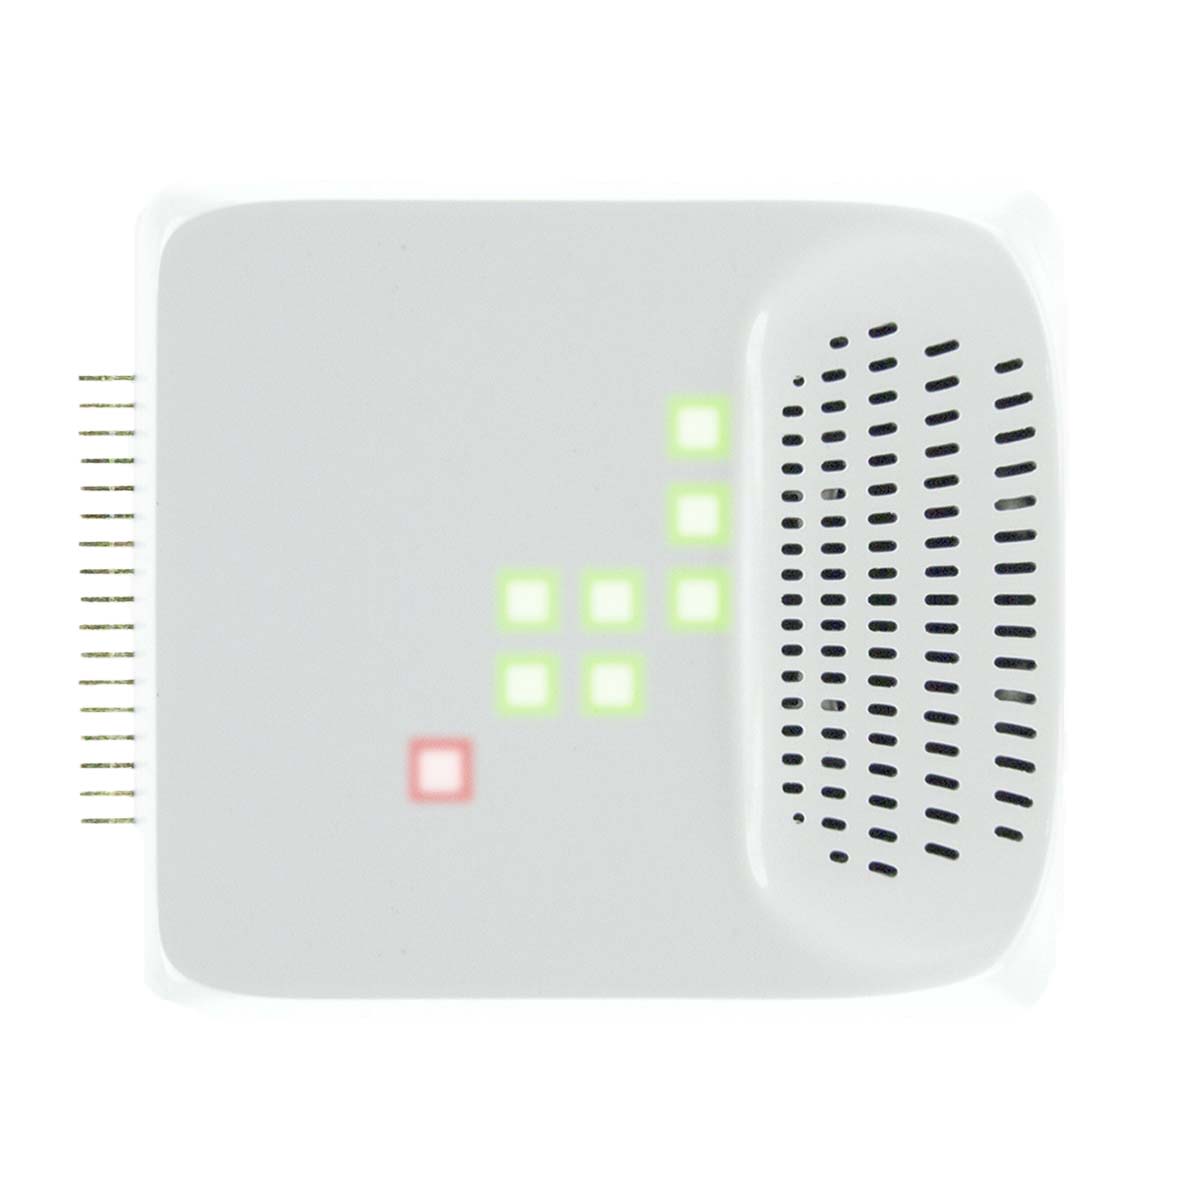 Pi-Top Pi-Top PULSE-Lautsprecher mit LED-Matrix für Raspberry Pi und Pi-Top-Laptops Audio